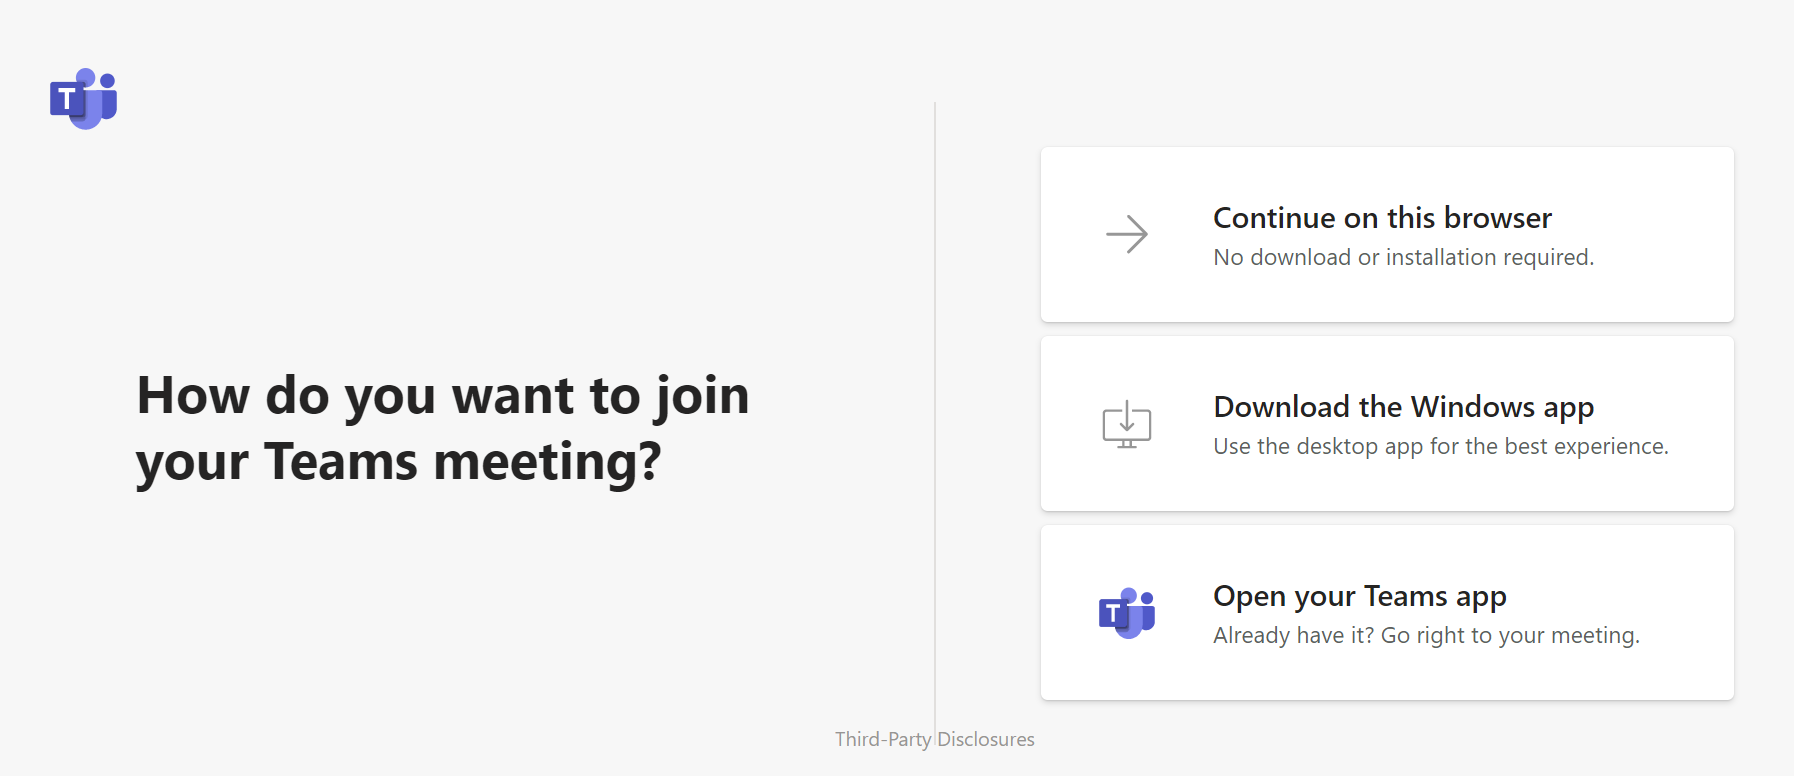 invite-external-user-to-teams-meeting